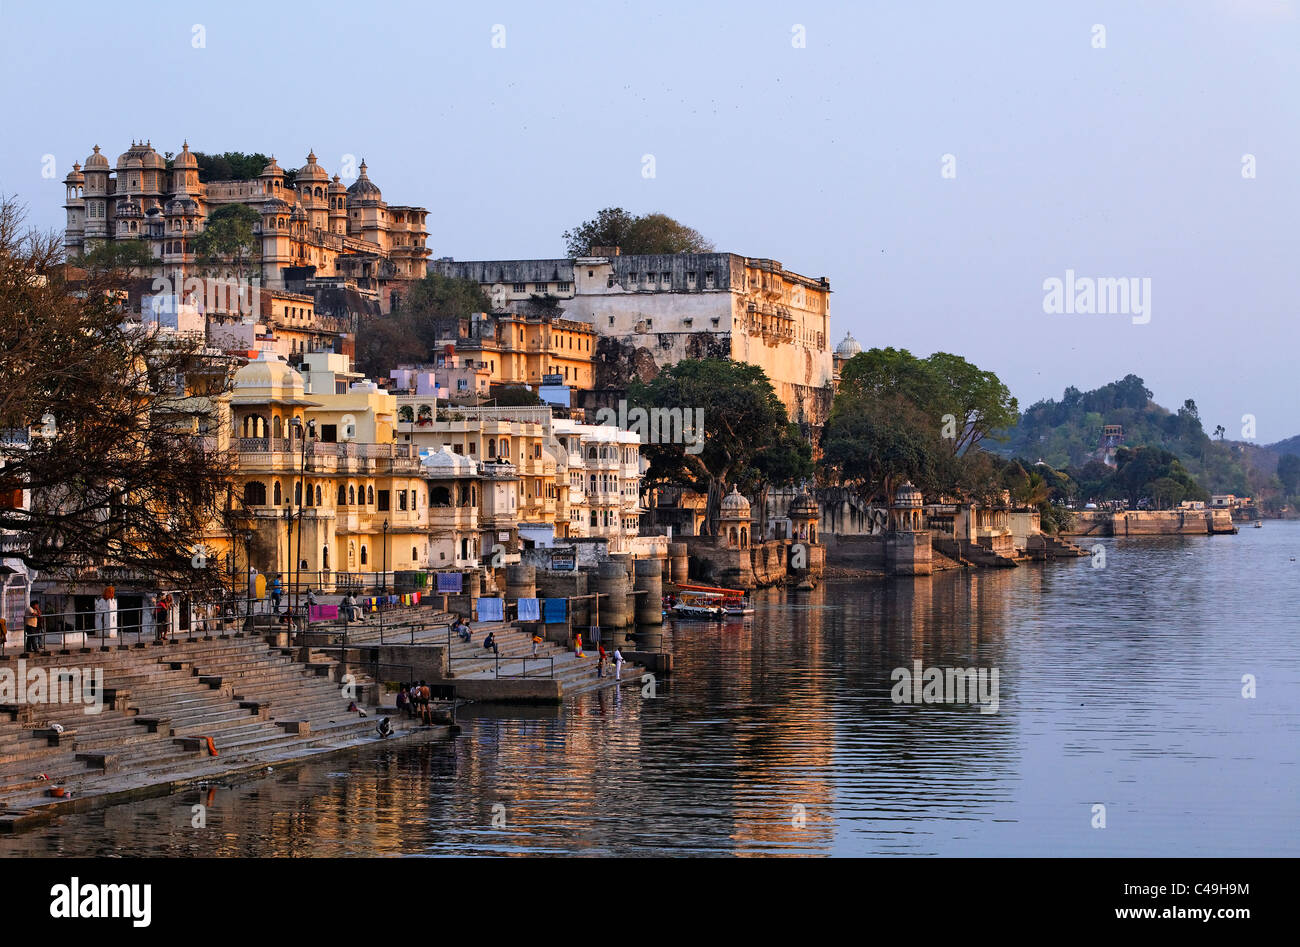 India - Rajasthan - Udaipur - the City Palace and Lake Pichola Stock Photo